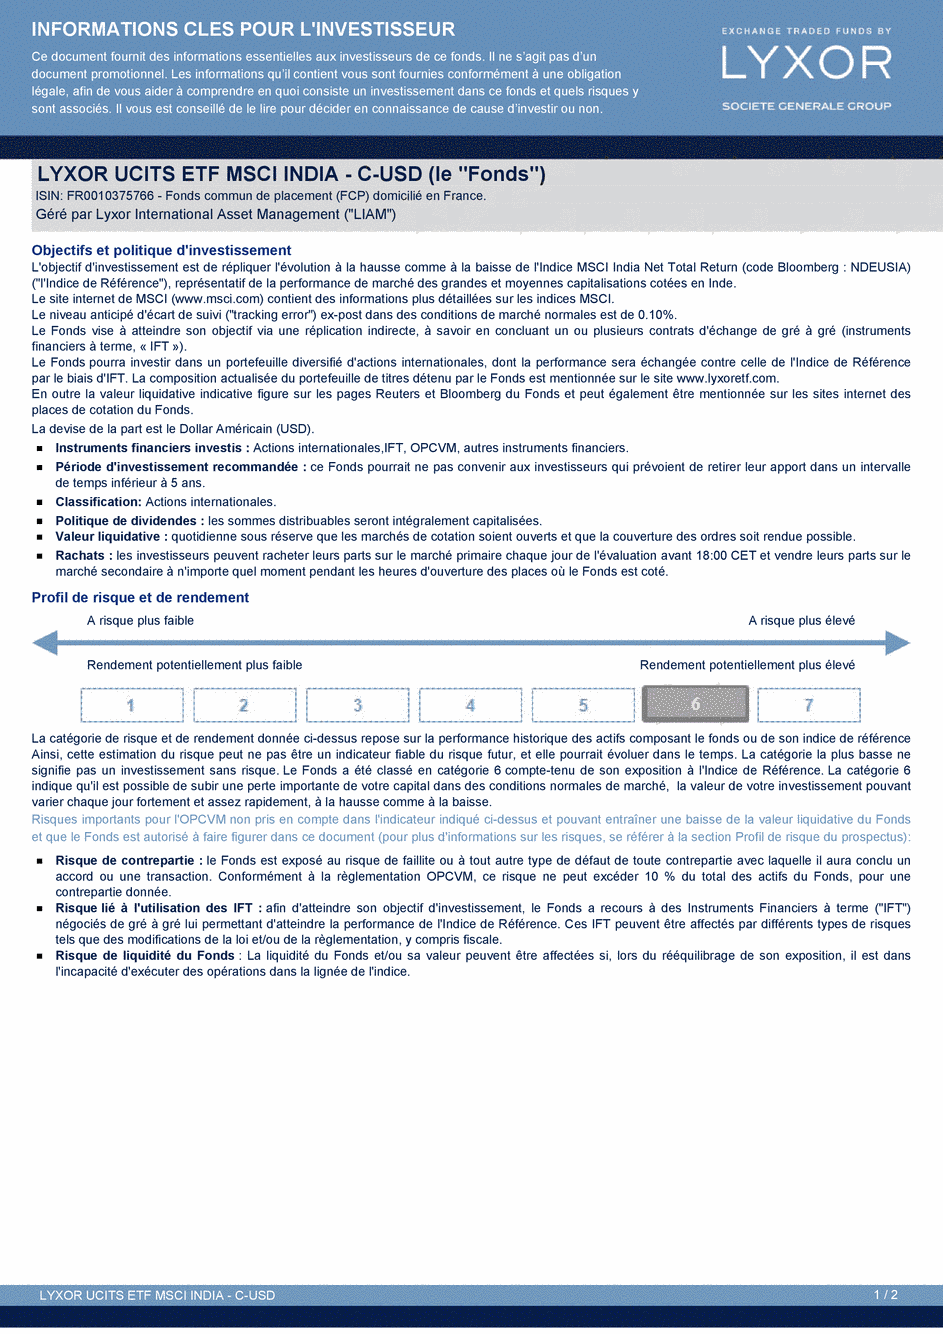 DICI Lyxor MSCI India UCITS ETF - Acc (USD) - 27/02/2015 - Français